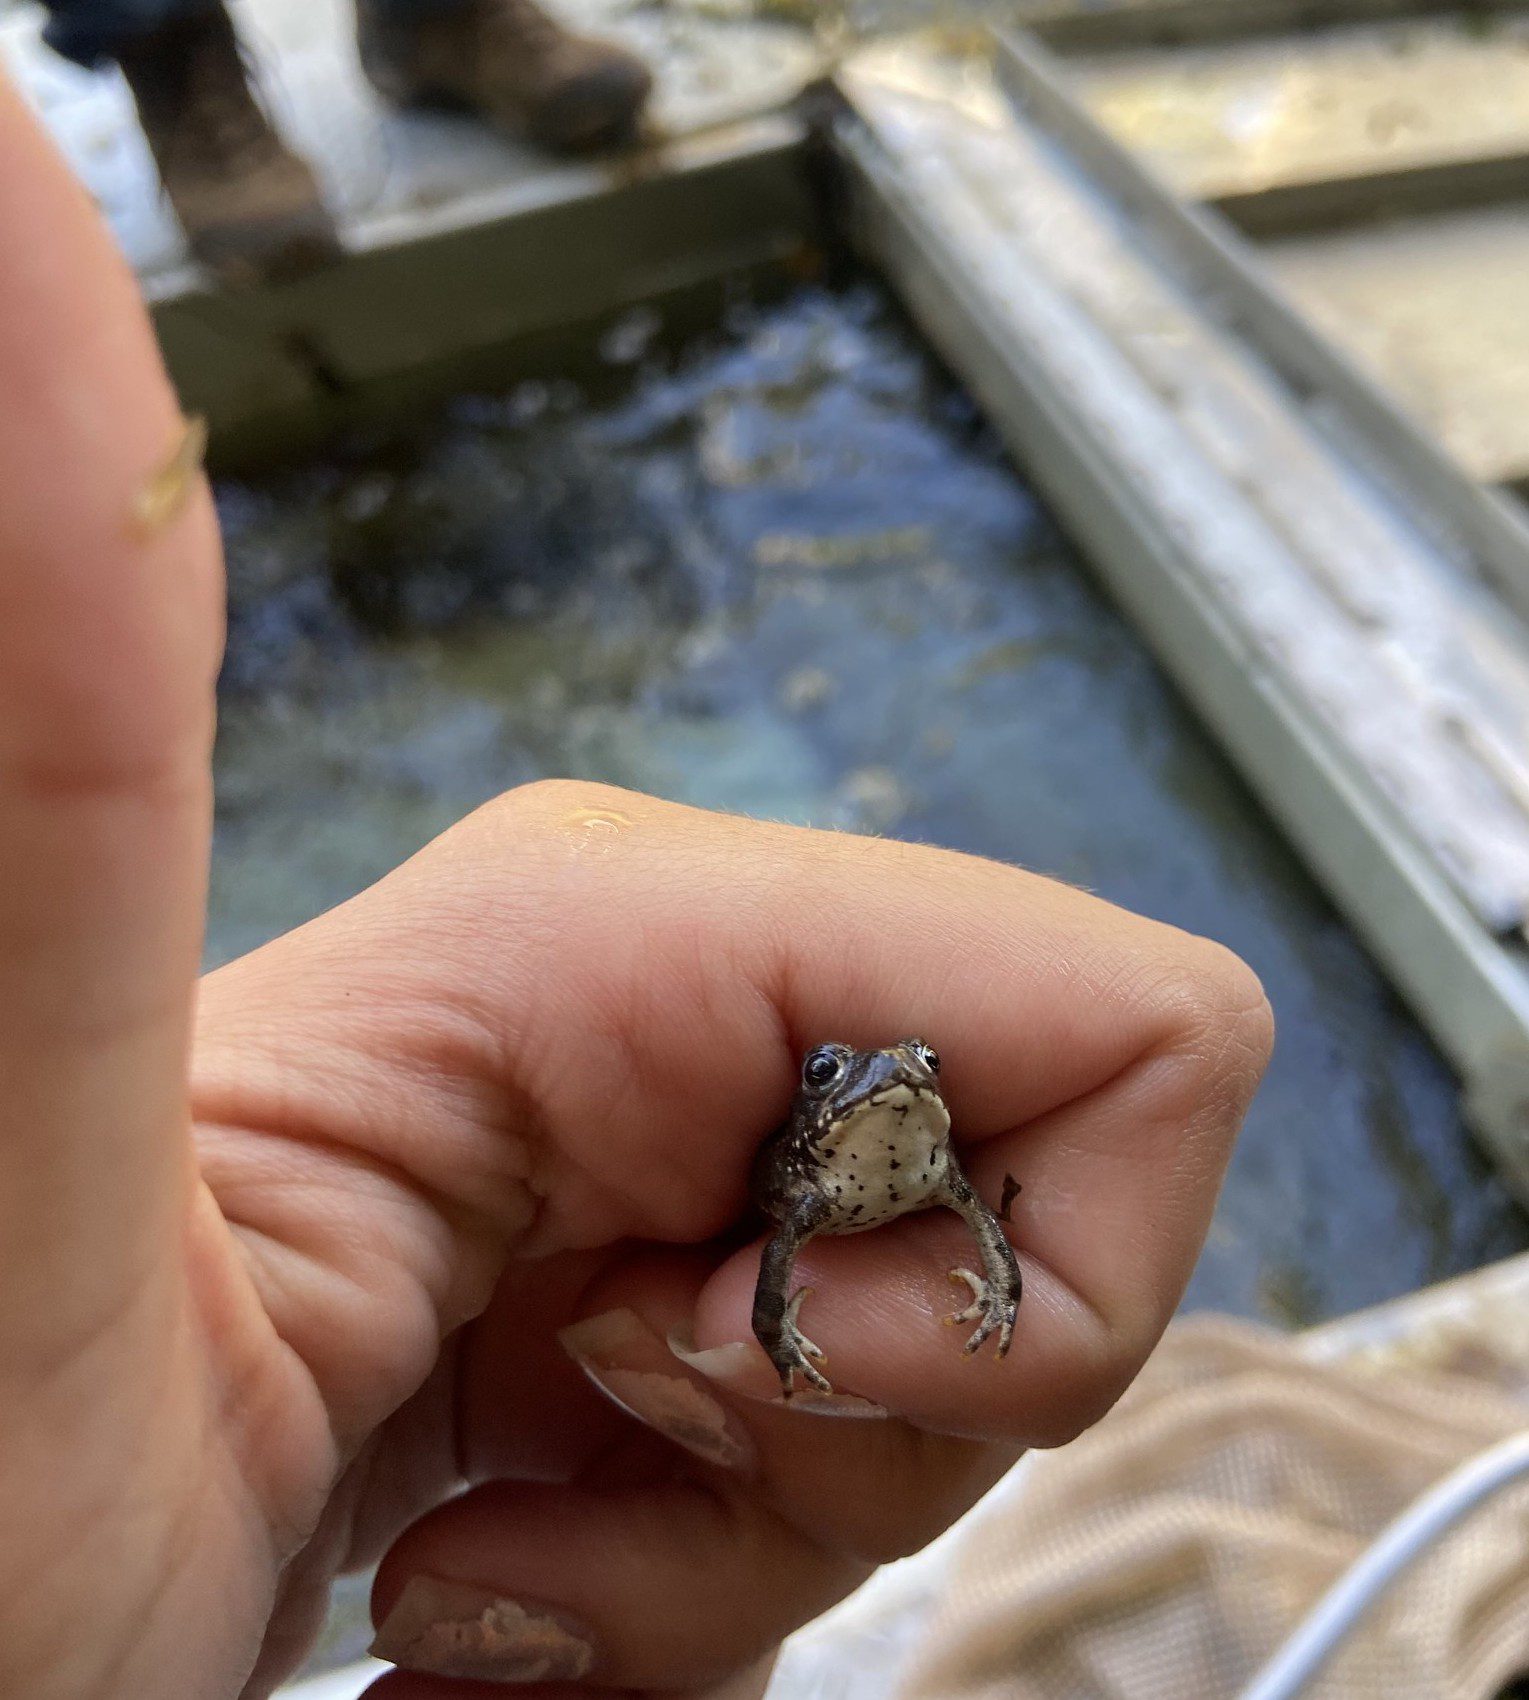 Juvenile California toad in rotary screw trap